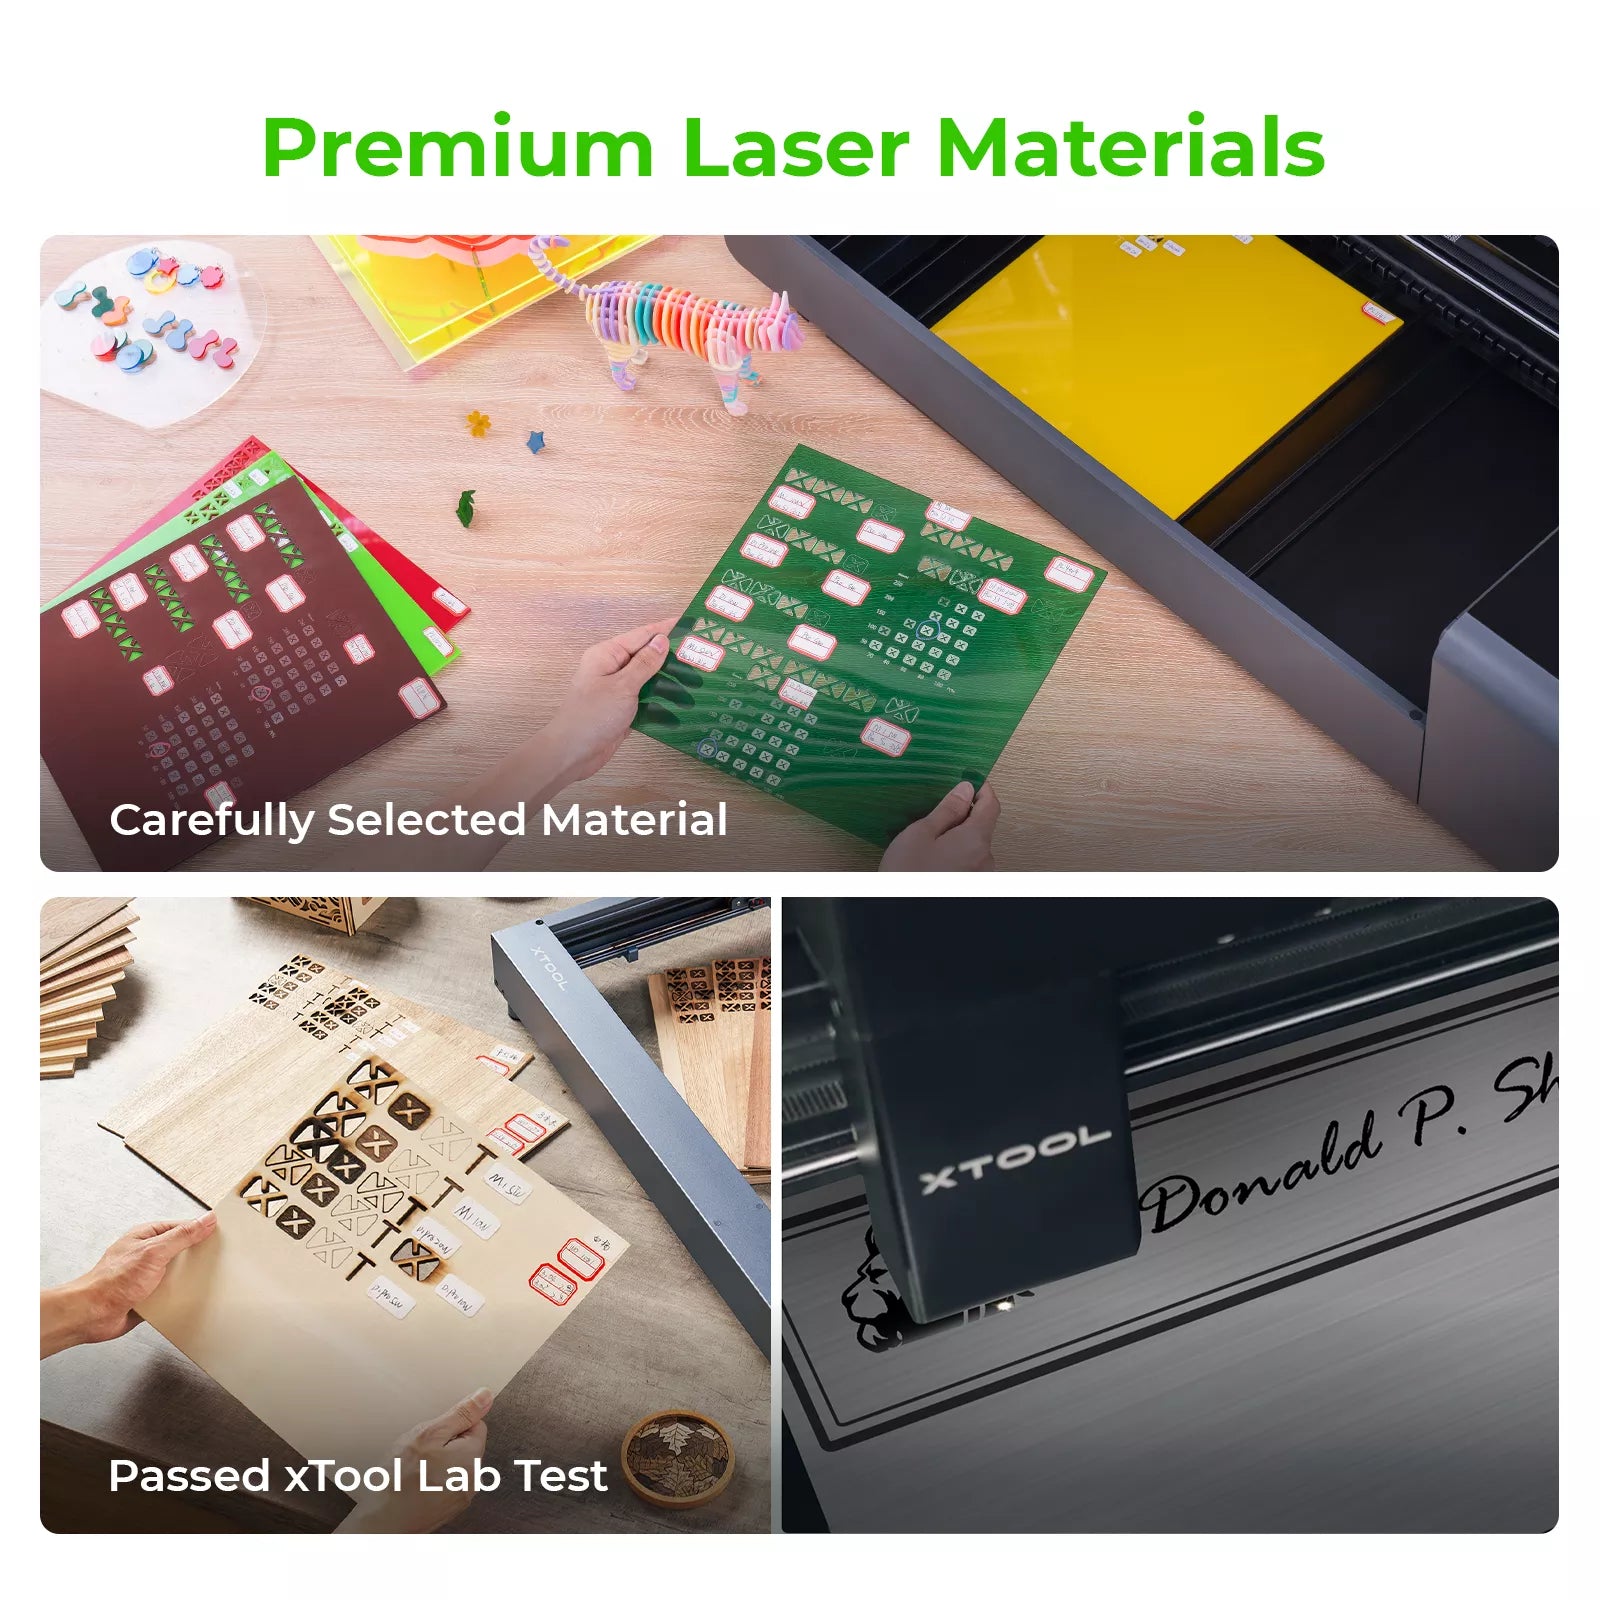 xTool S1 Laser Material Kit (34pcs)